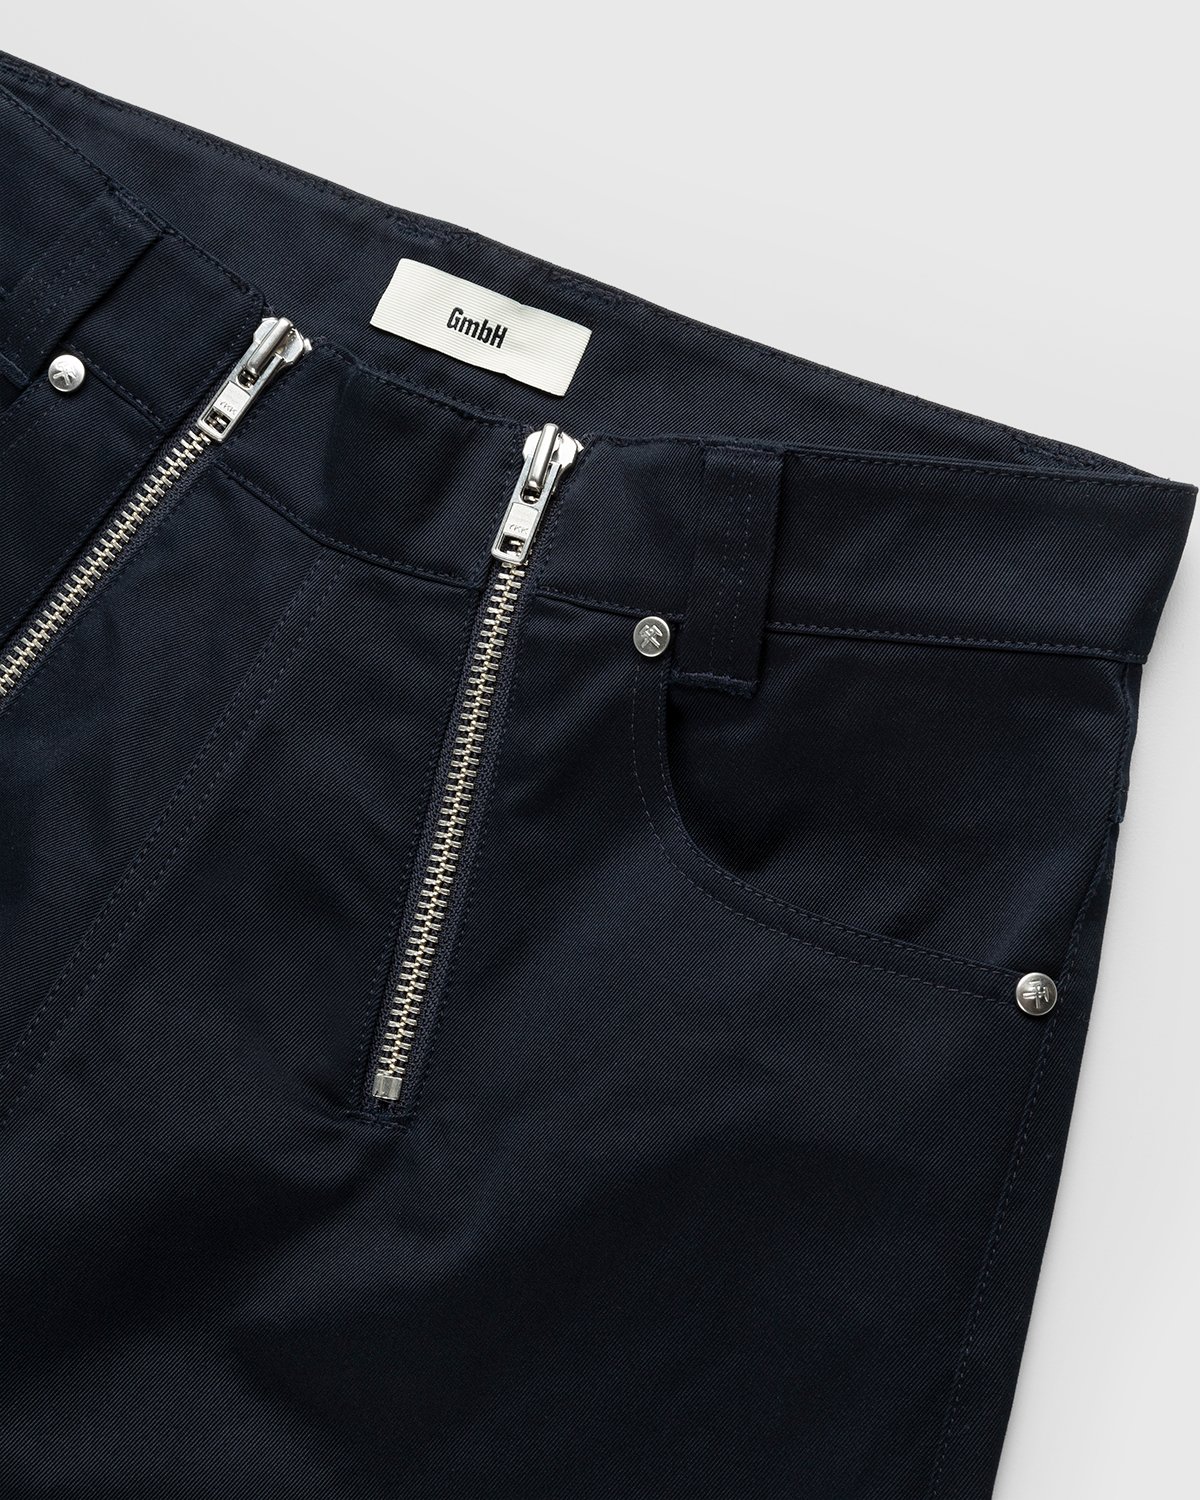 GmbH - Alvan Denim Trousers Navy - Clothing - Blue - Image 5